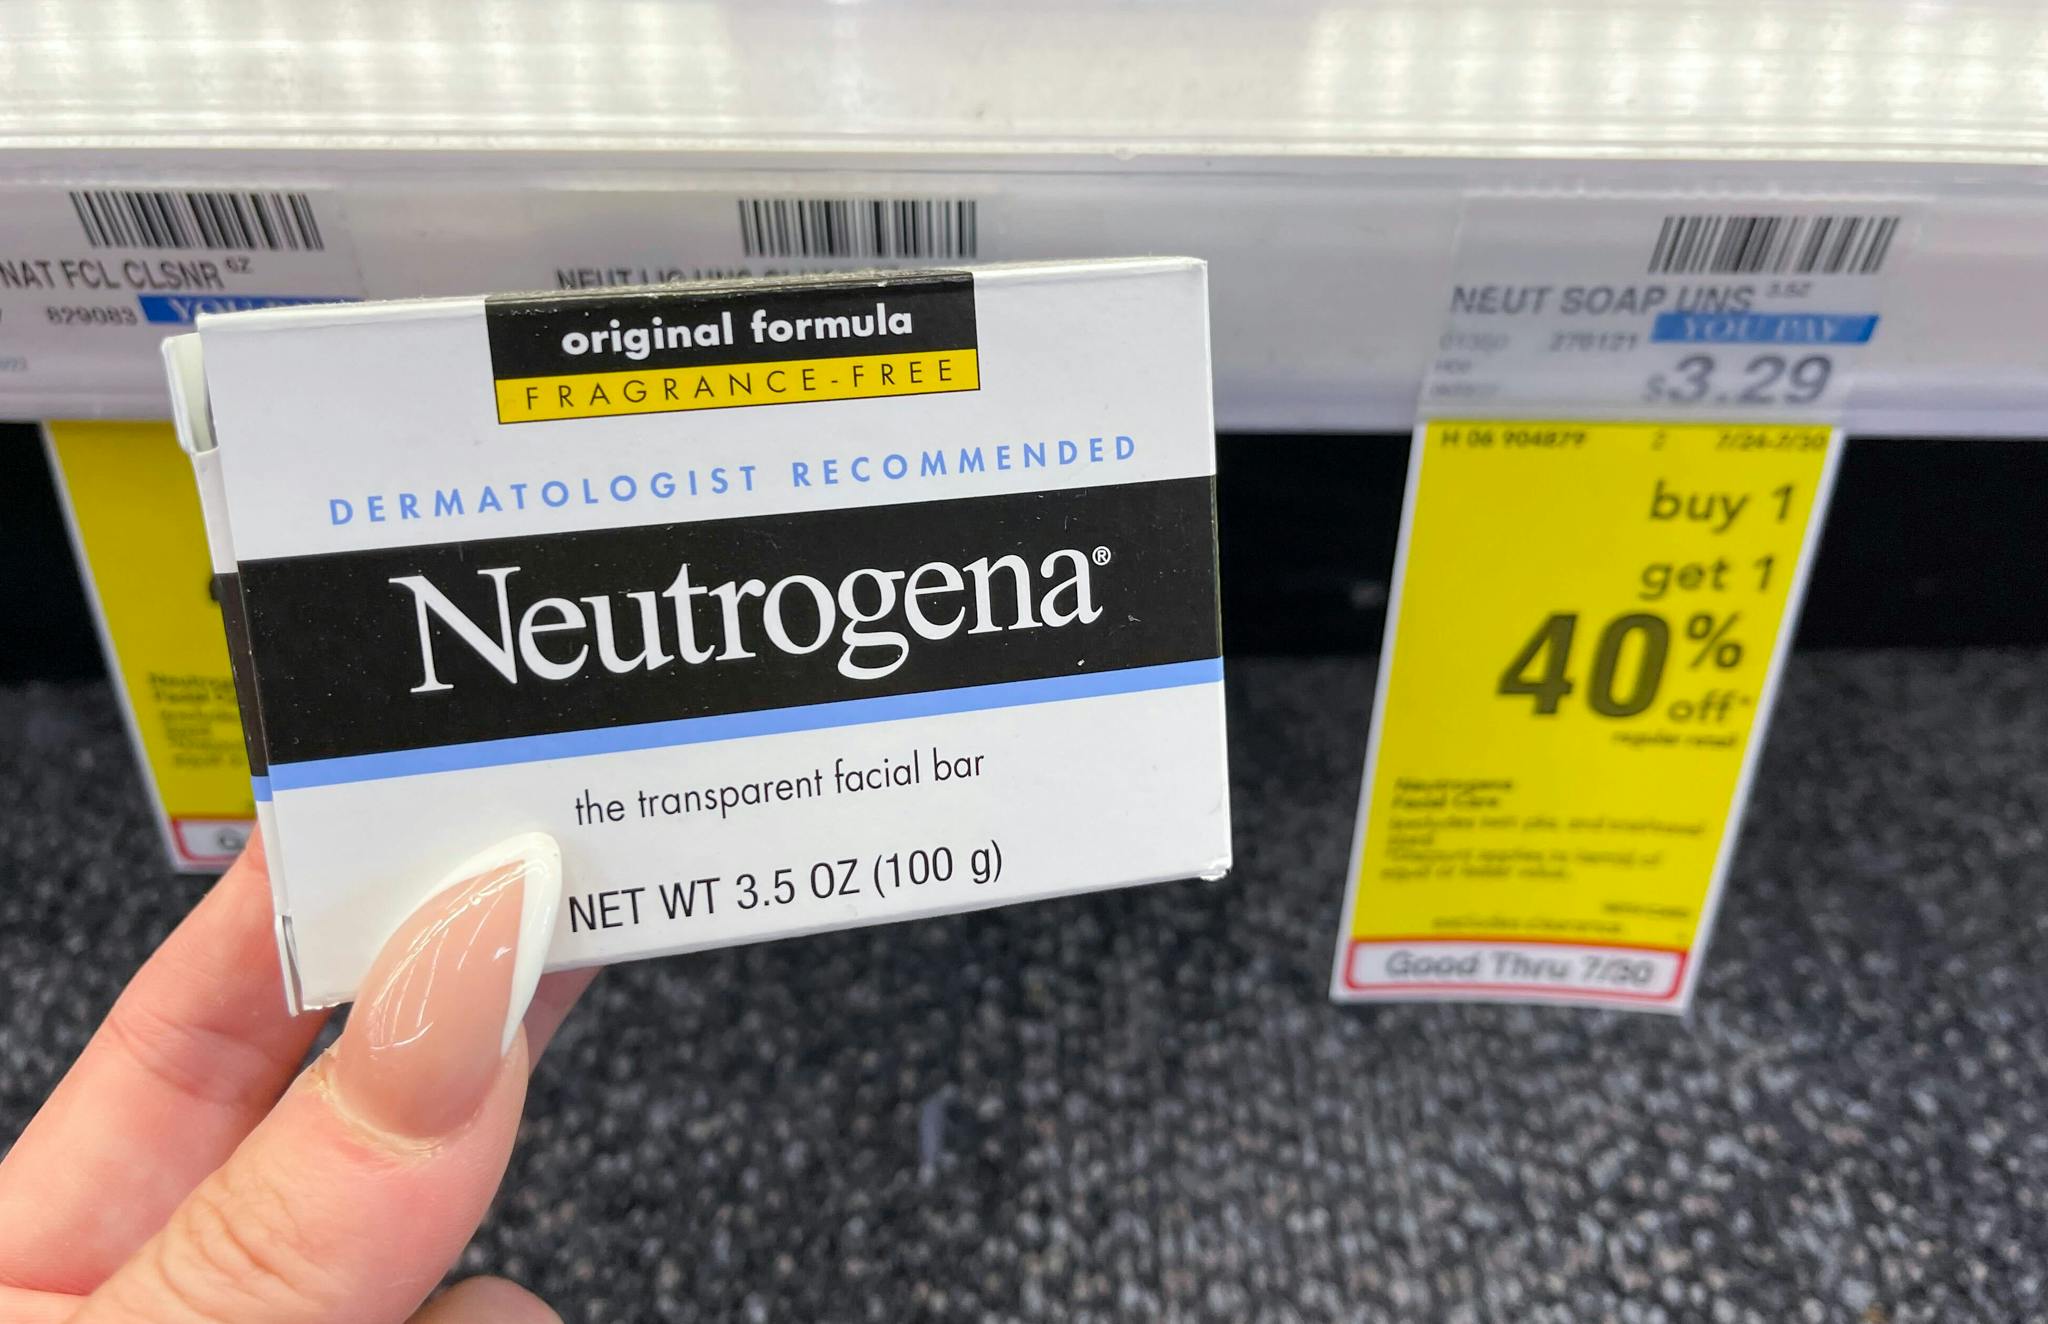 neutrogena facial bar held next to sale tag